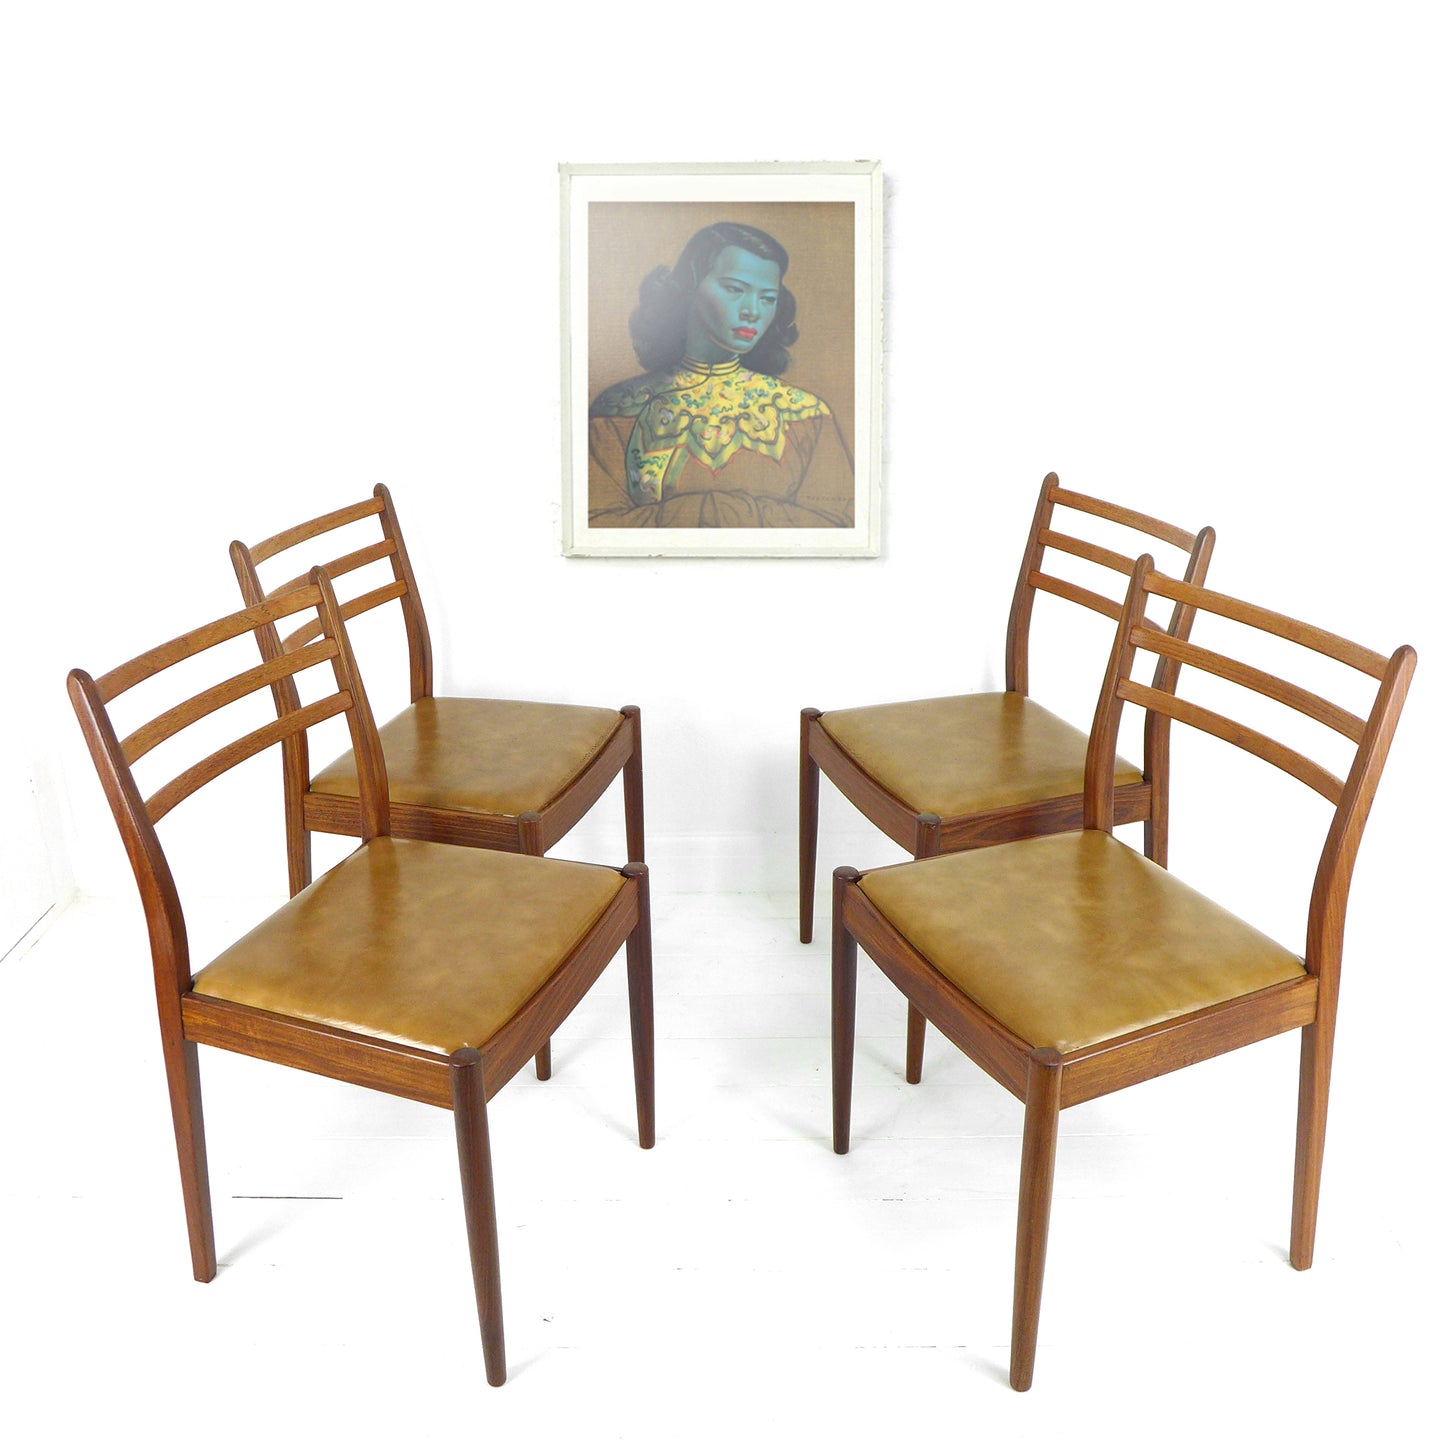 Vintage G PLAN Dining Chairs x4 - Original Leather Seats - Mid Century Teak Set of 4